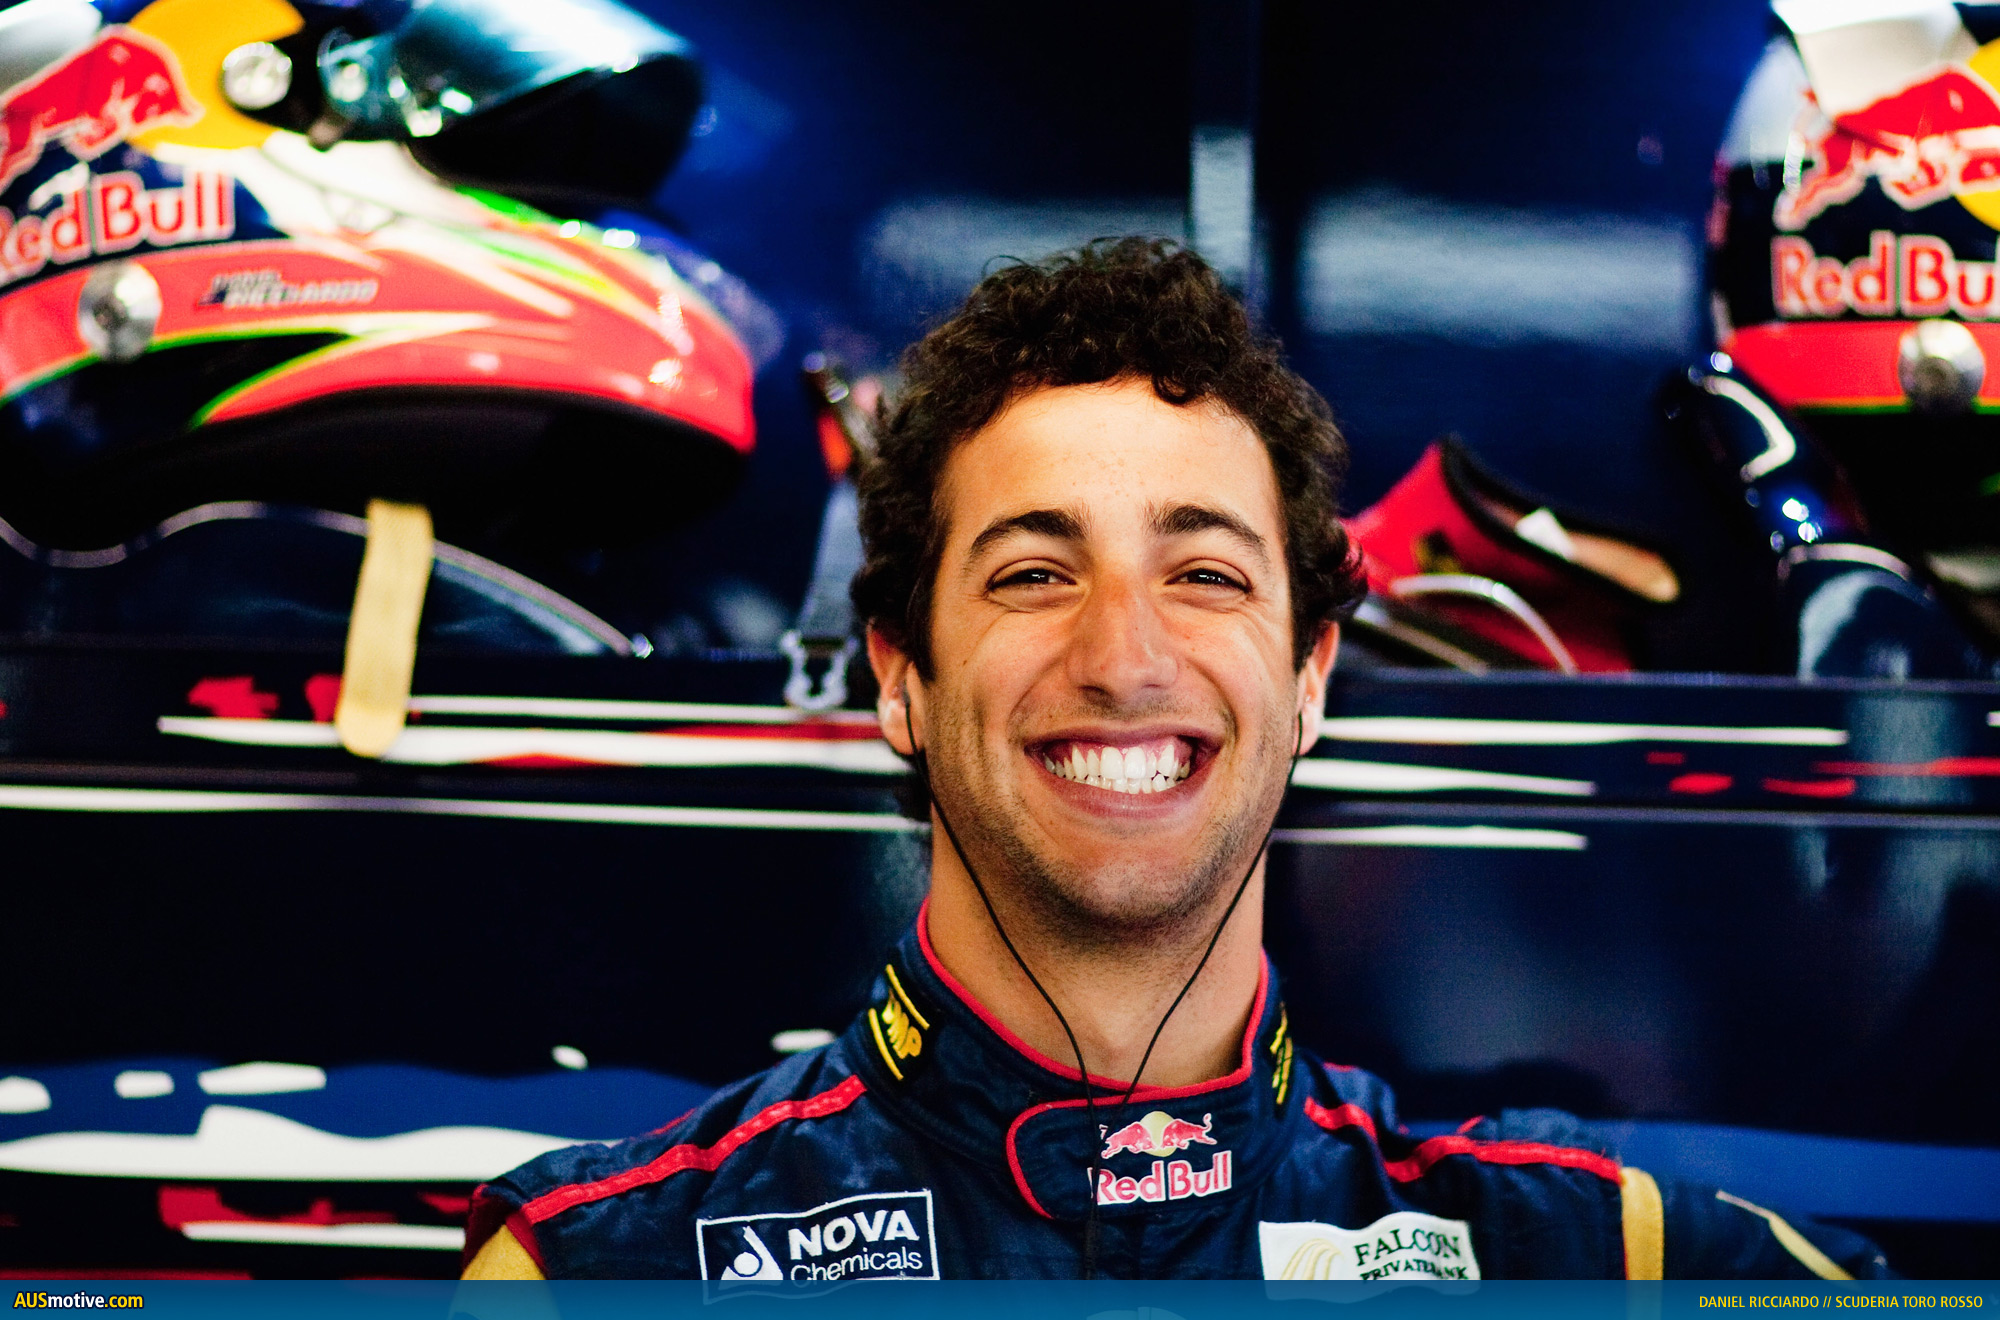 AUSmotive.com » Ricciardo to drive for Toro Rosso in 2012